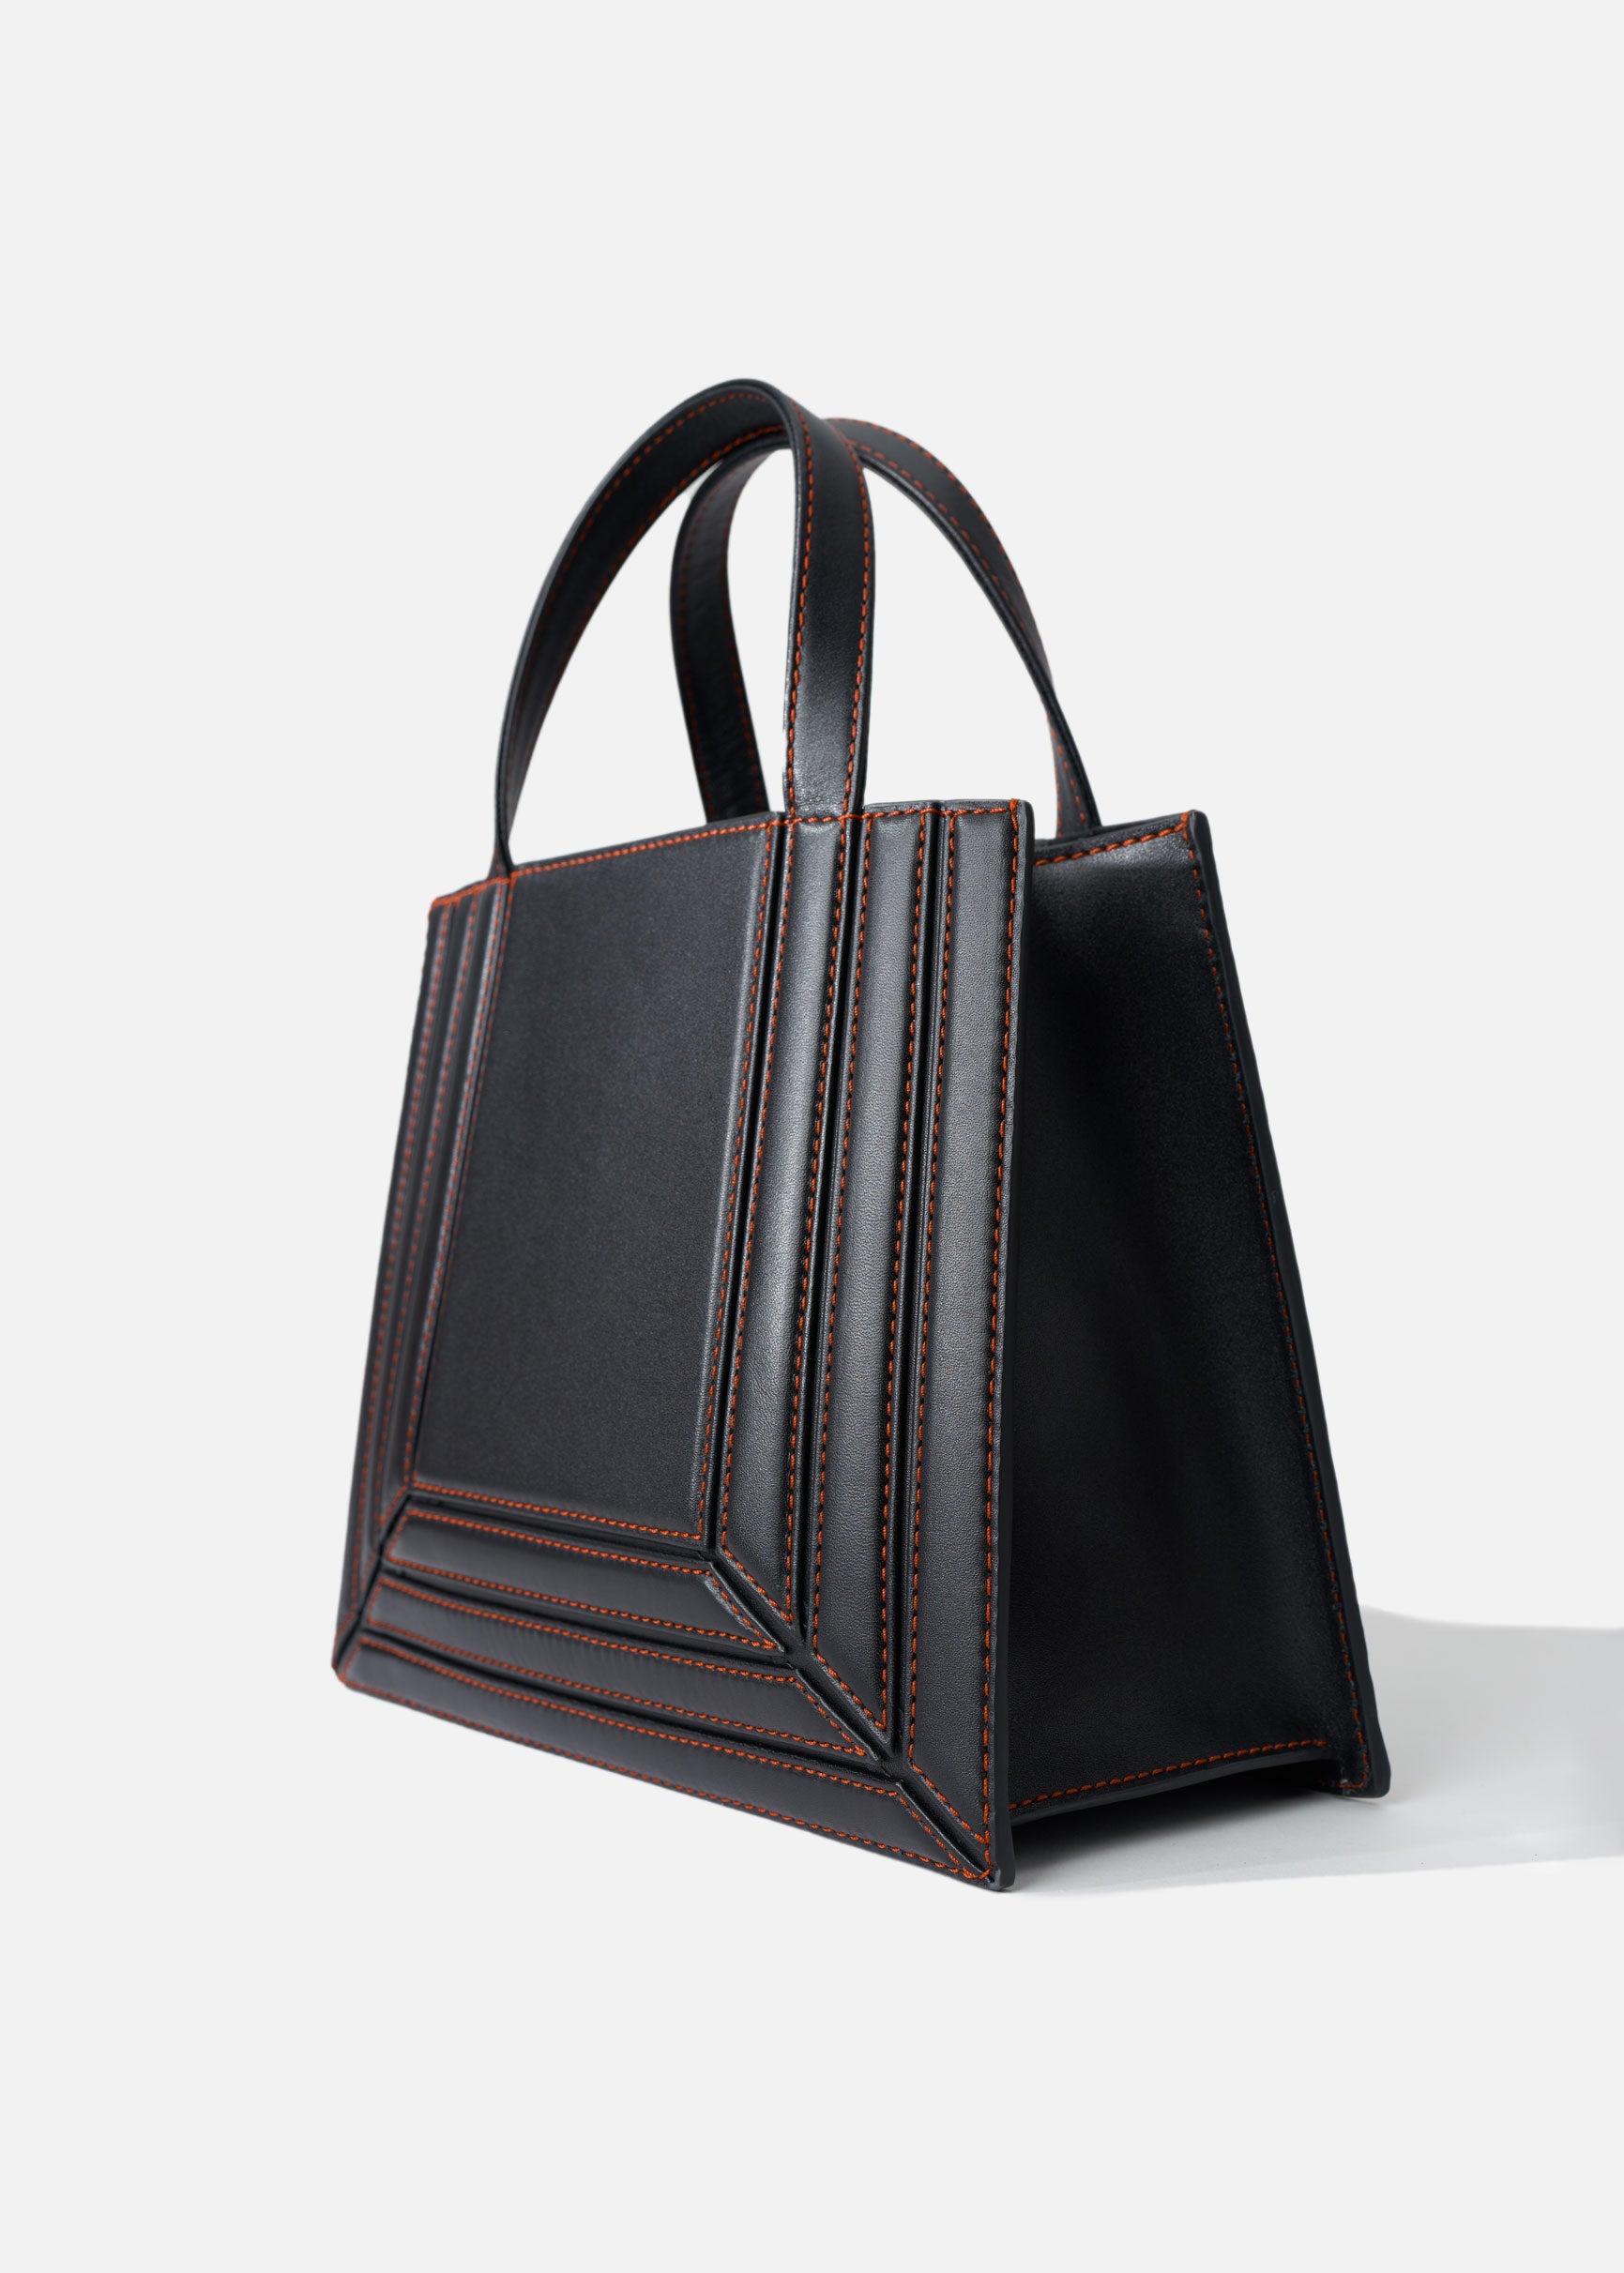 Palladian laramie leather double handle bag in black